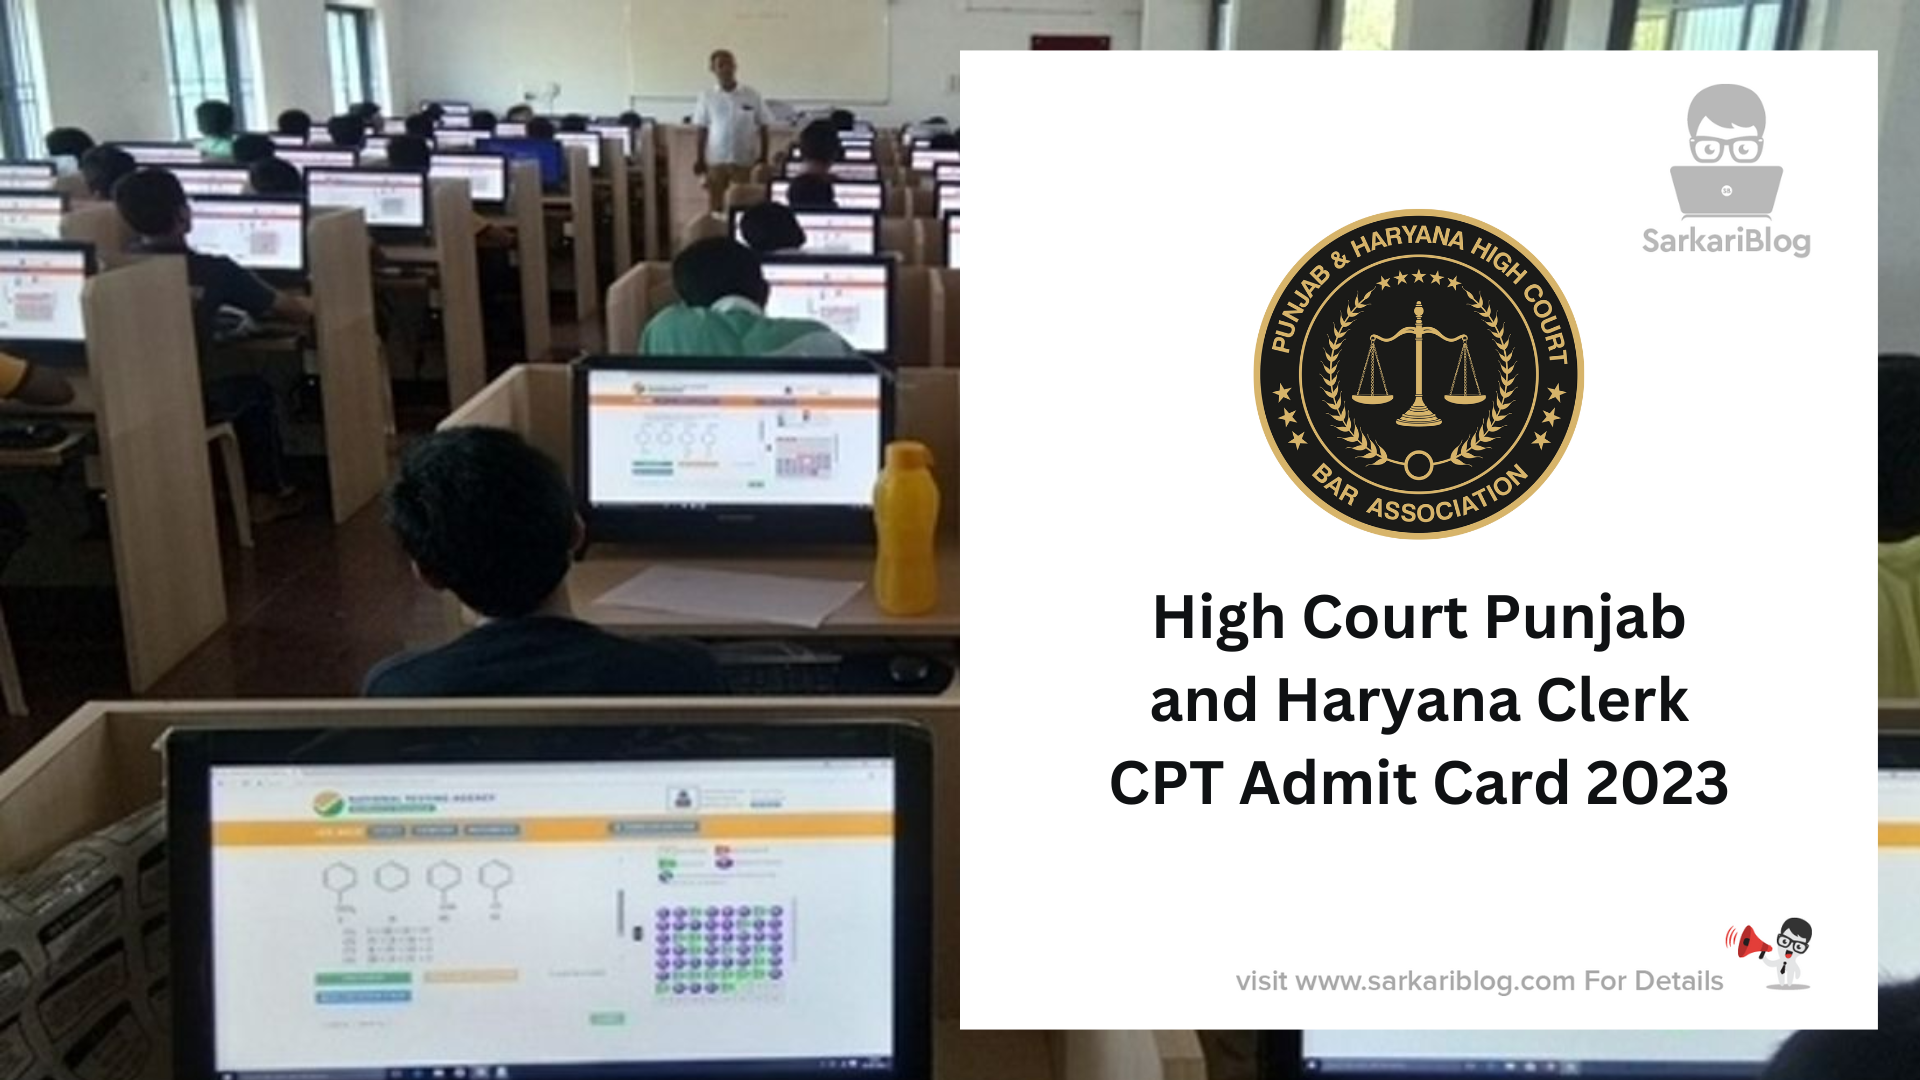 High Court Punjab and Haryana Clerk CPT Admit Card 2023